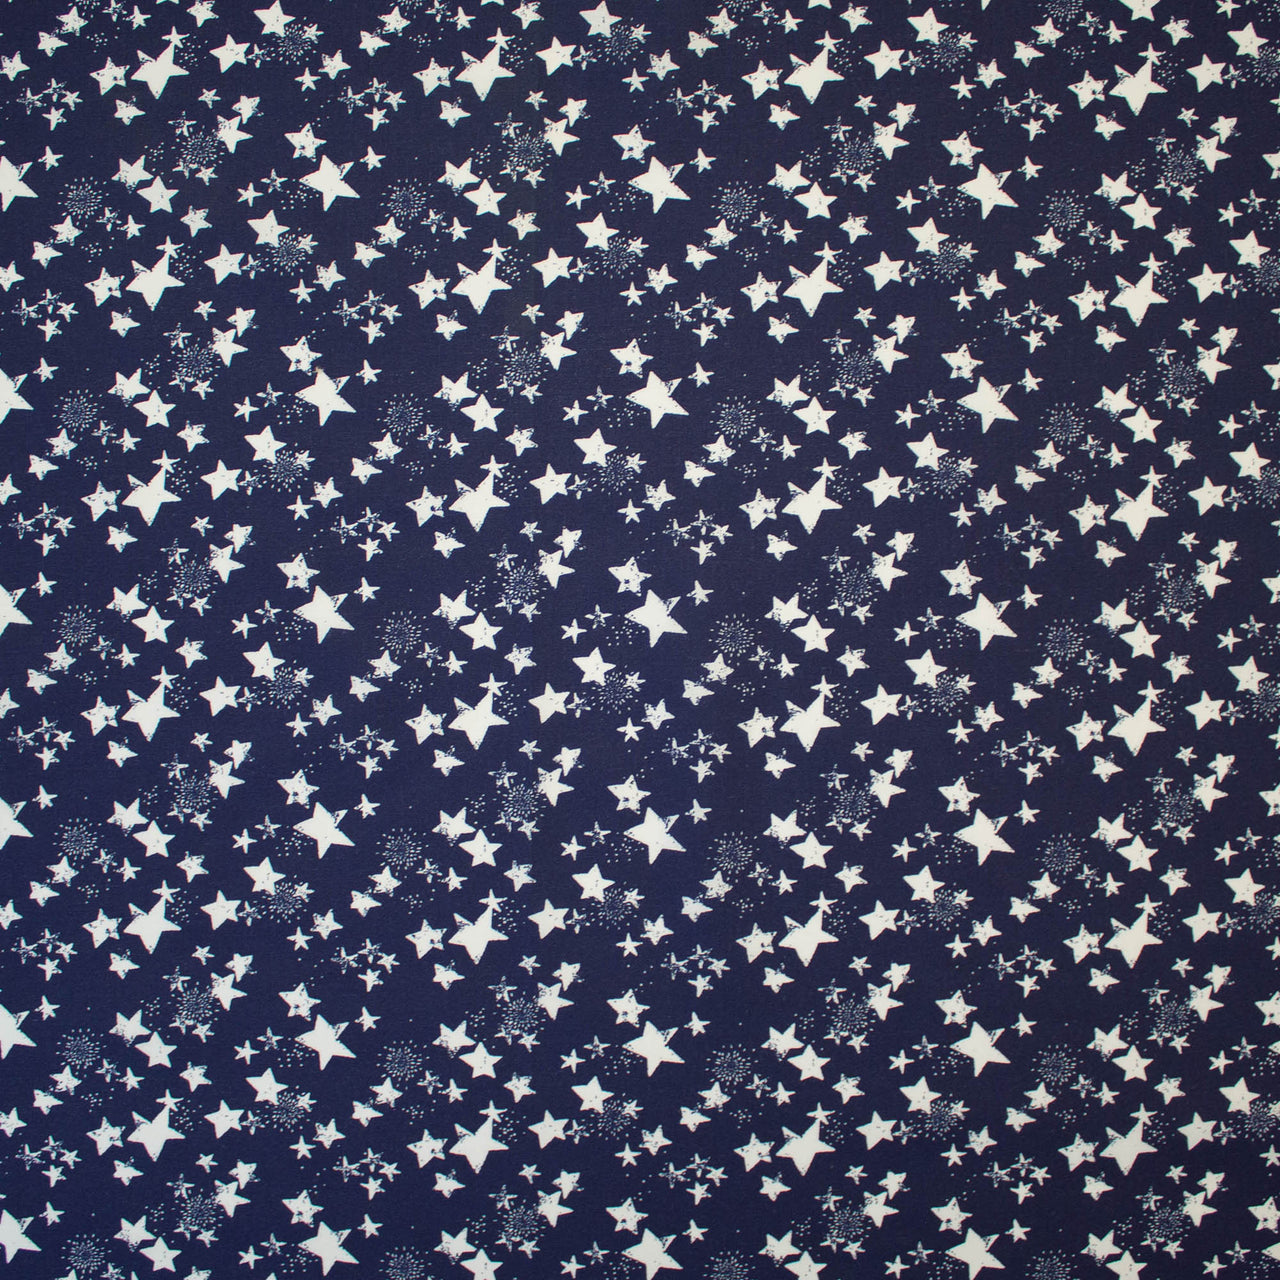 Stars at Night - White Stars on Navy Cotton Fabric Printed Cotton Fabric